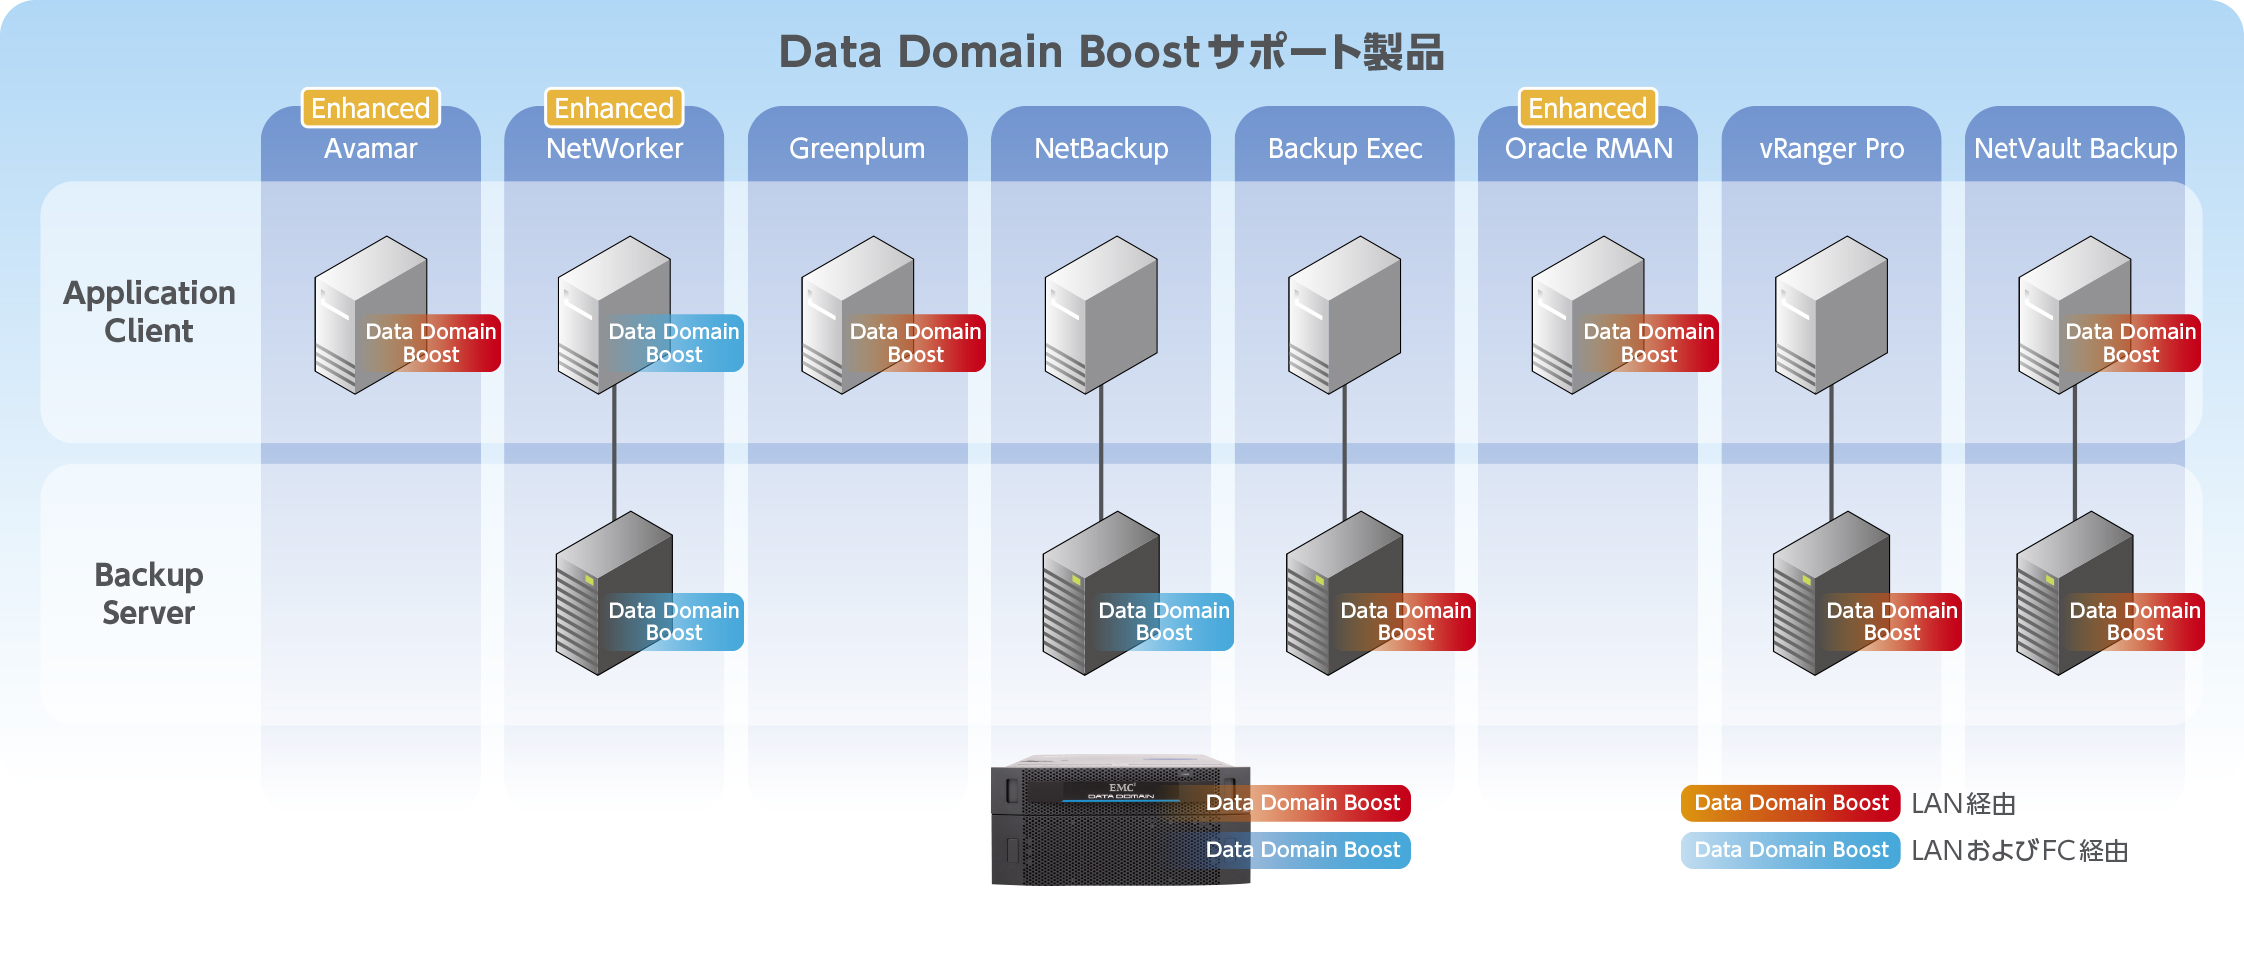 Dell EMC Data Domain Boostサポート製品